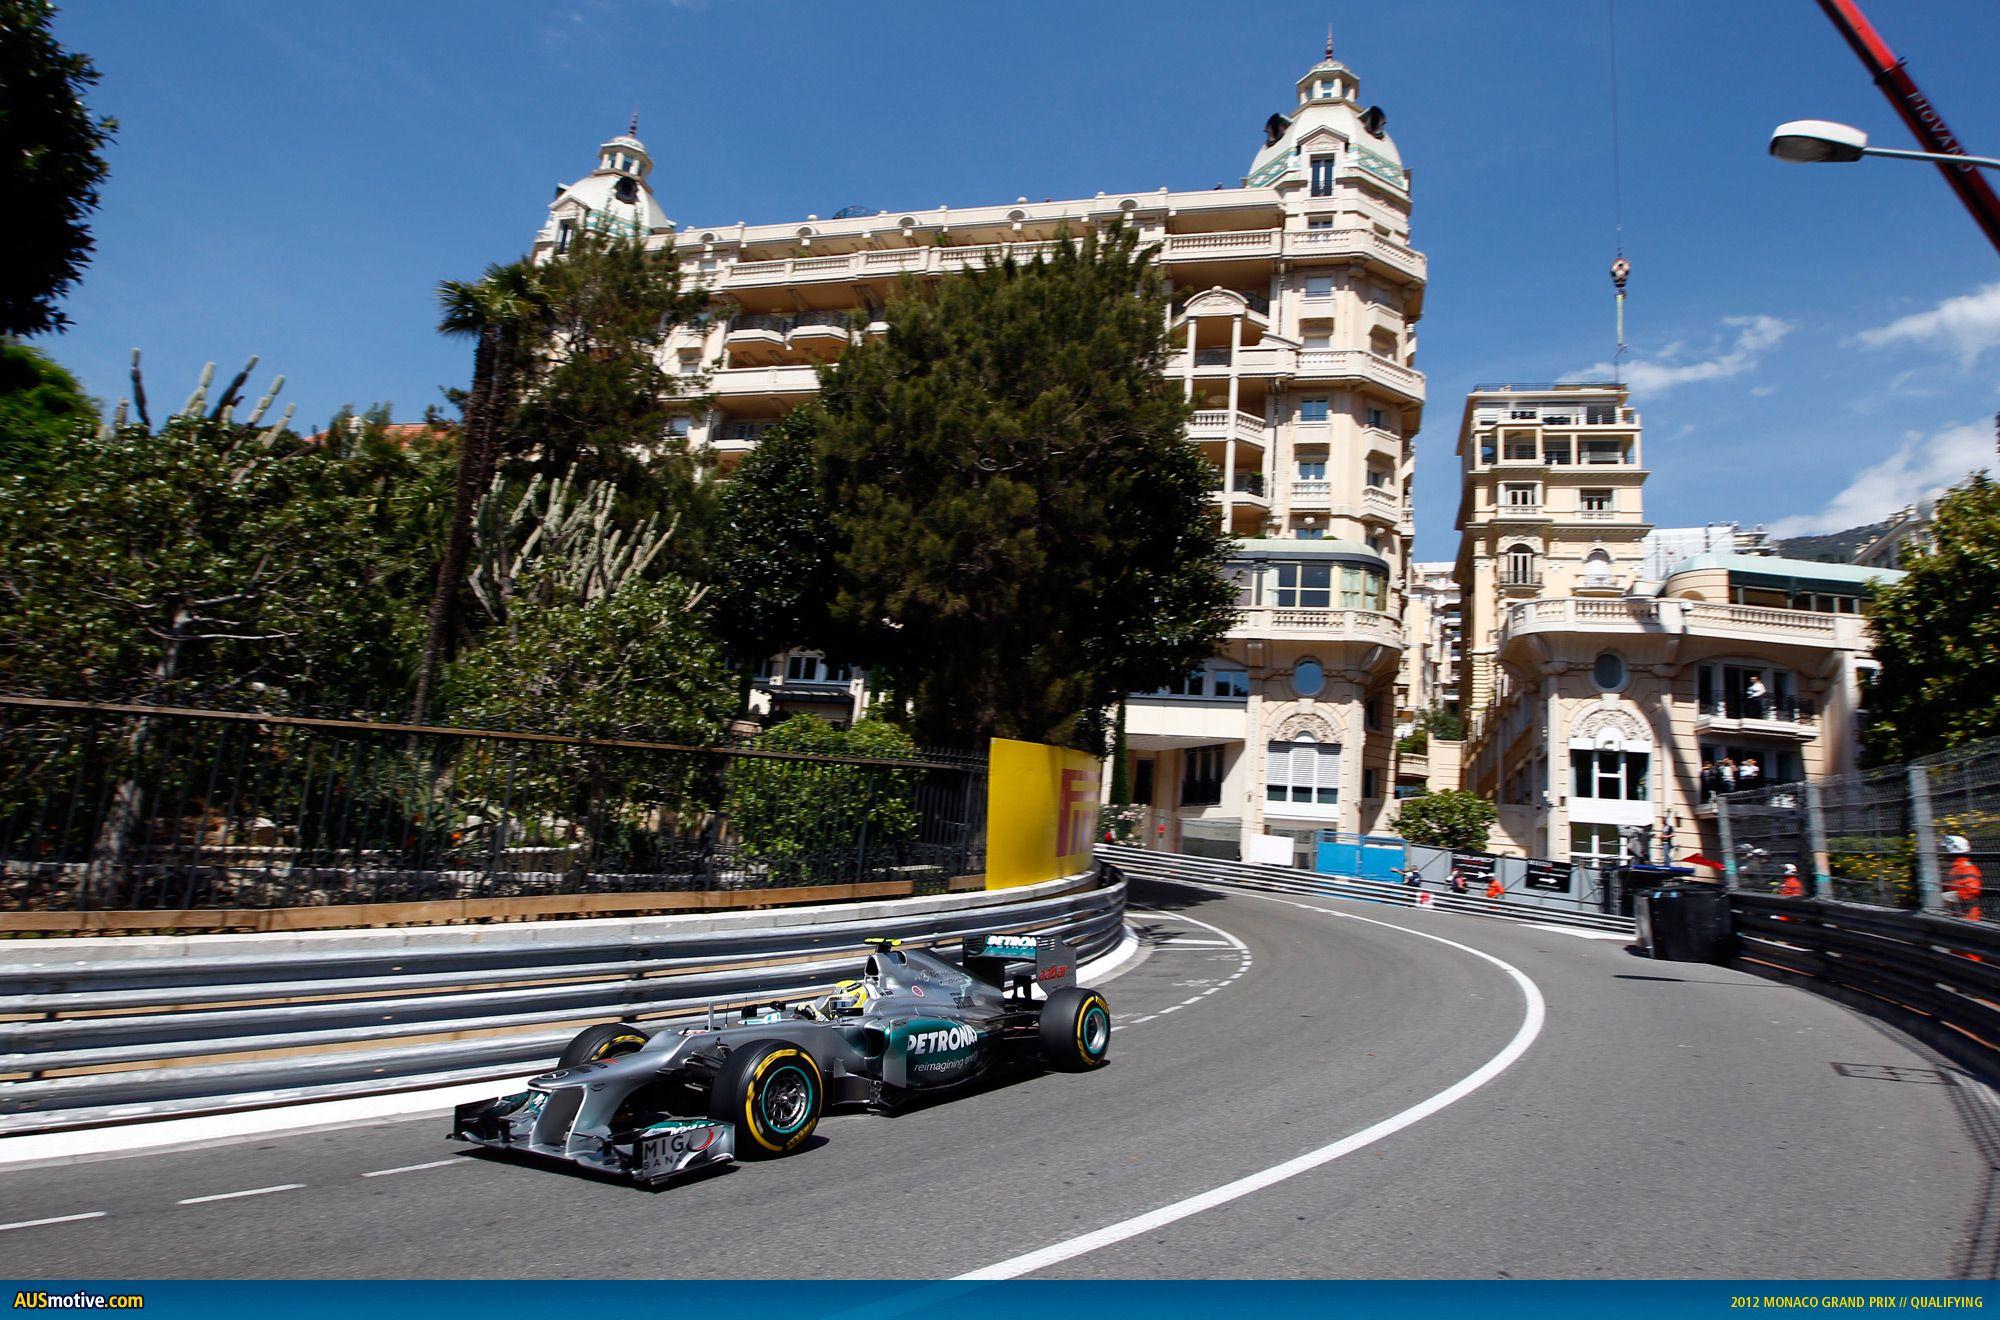 AUSmotive.com 2012 Monaco GP: Qualifying report